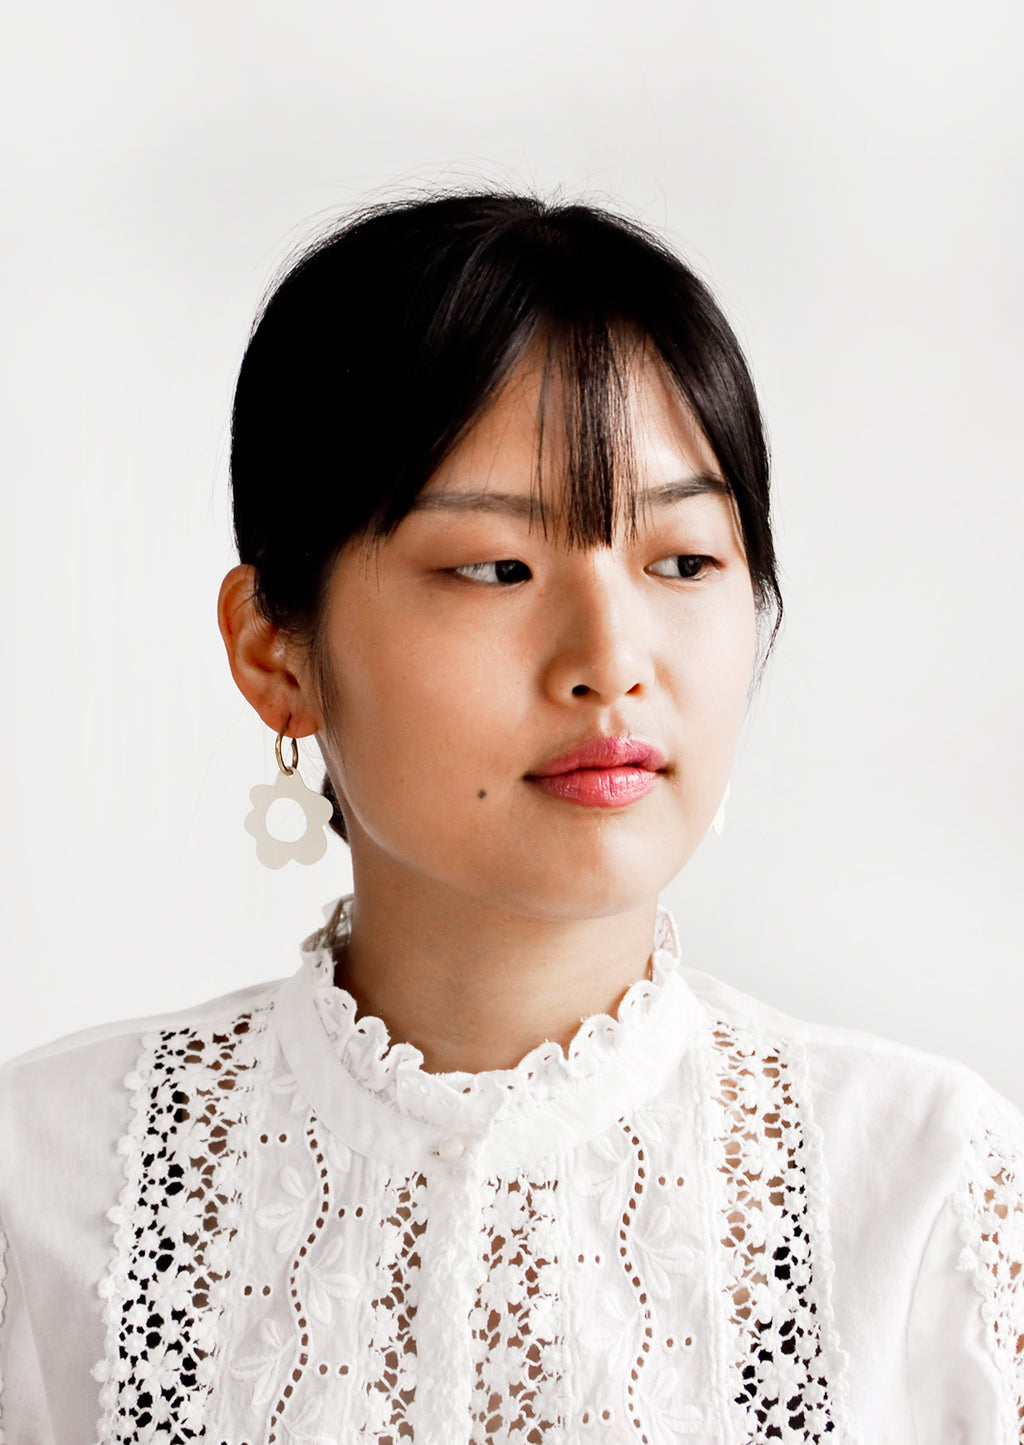 2: Model wears white flower-shaped earrings and white blouse.